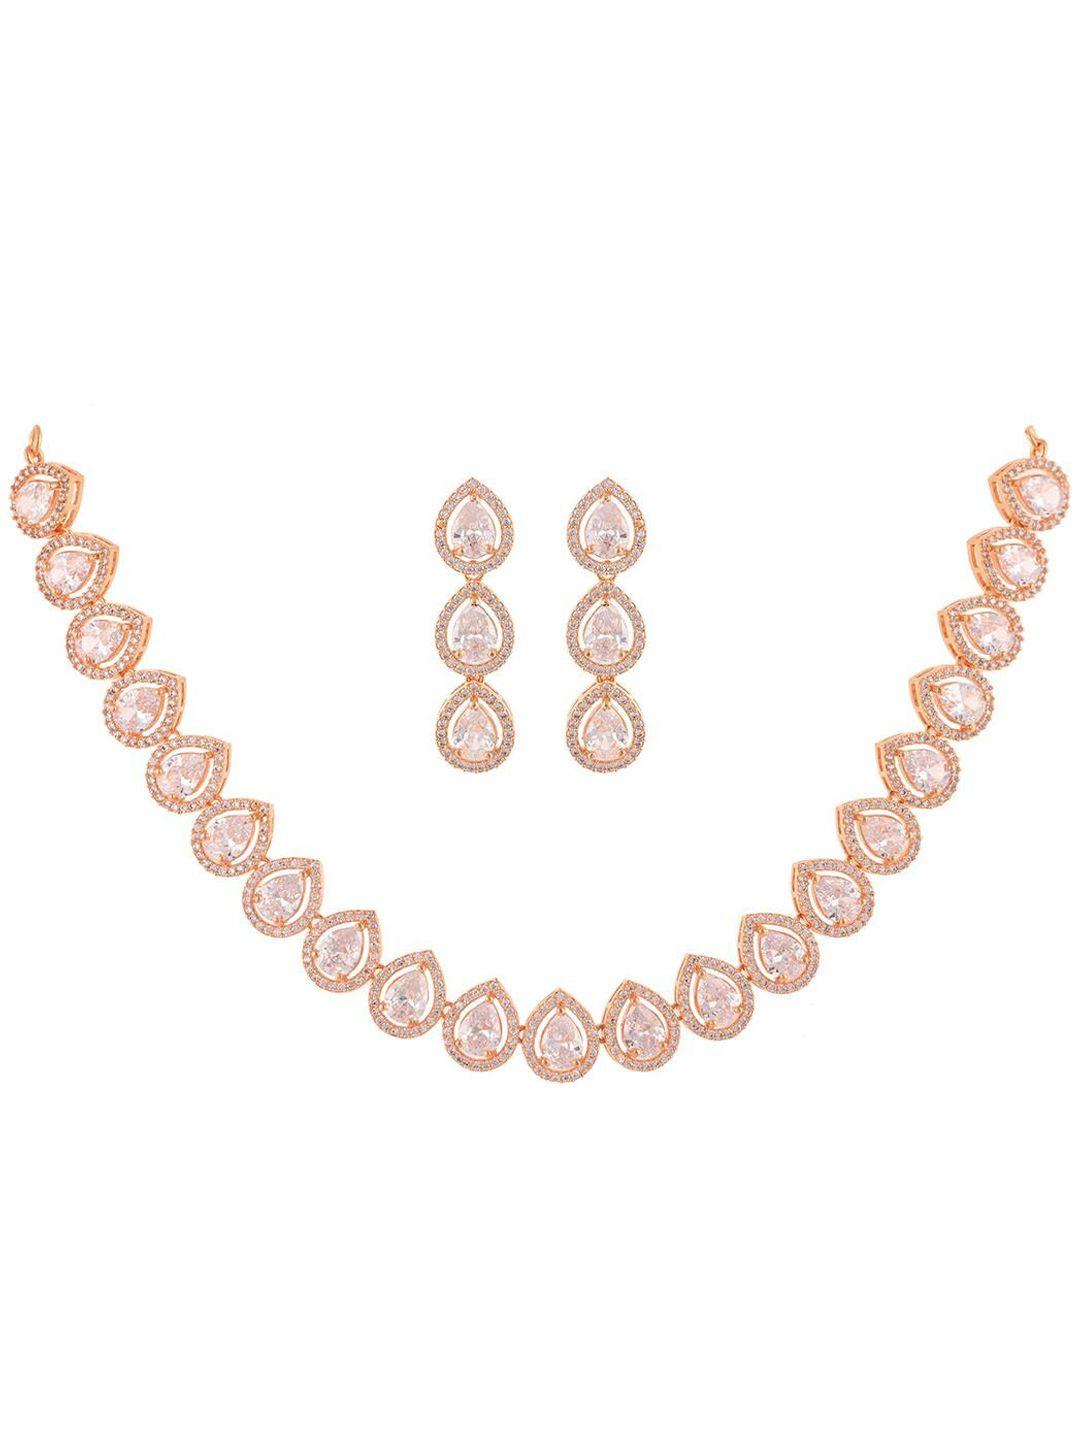 ratnavali jewels rose gold-plated american diamond-studded jewellery set